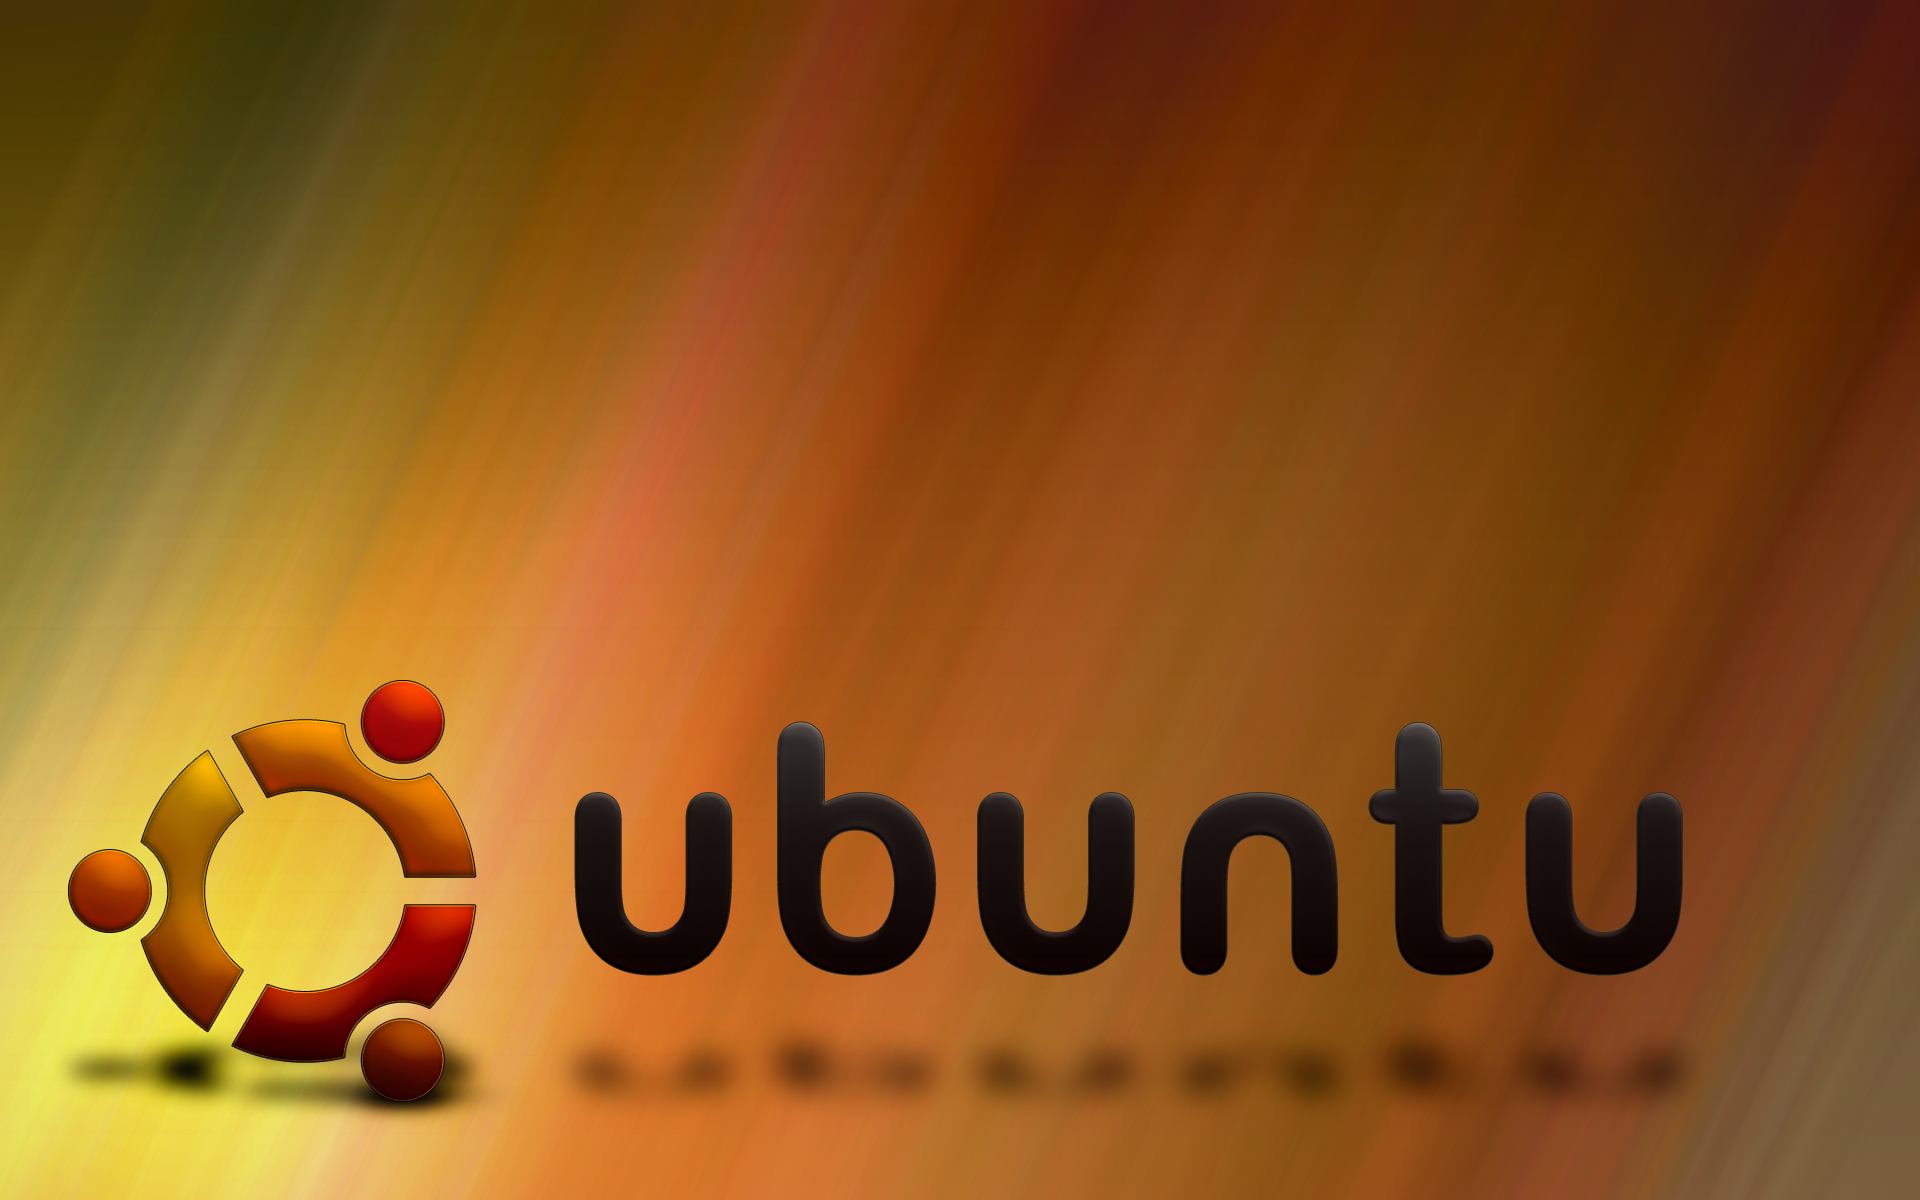 ubuntu wallpaper,text,schriftart,grafik,makrofotografie,grafikdesign